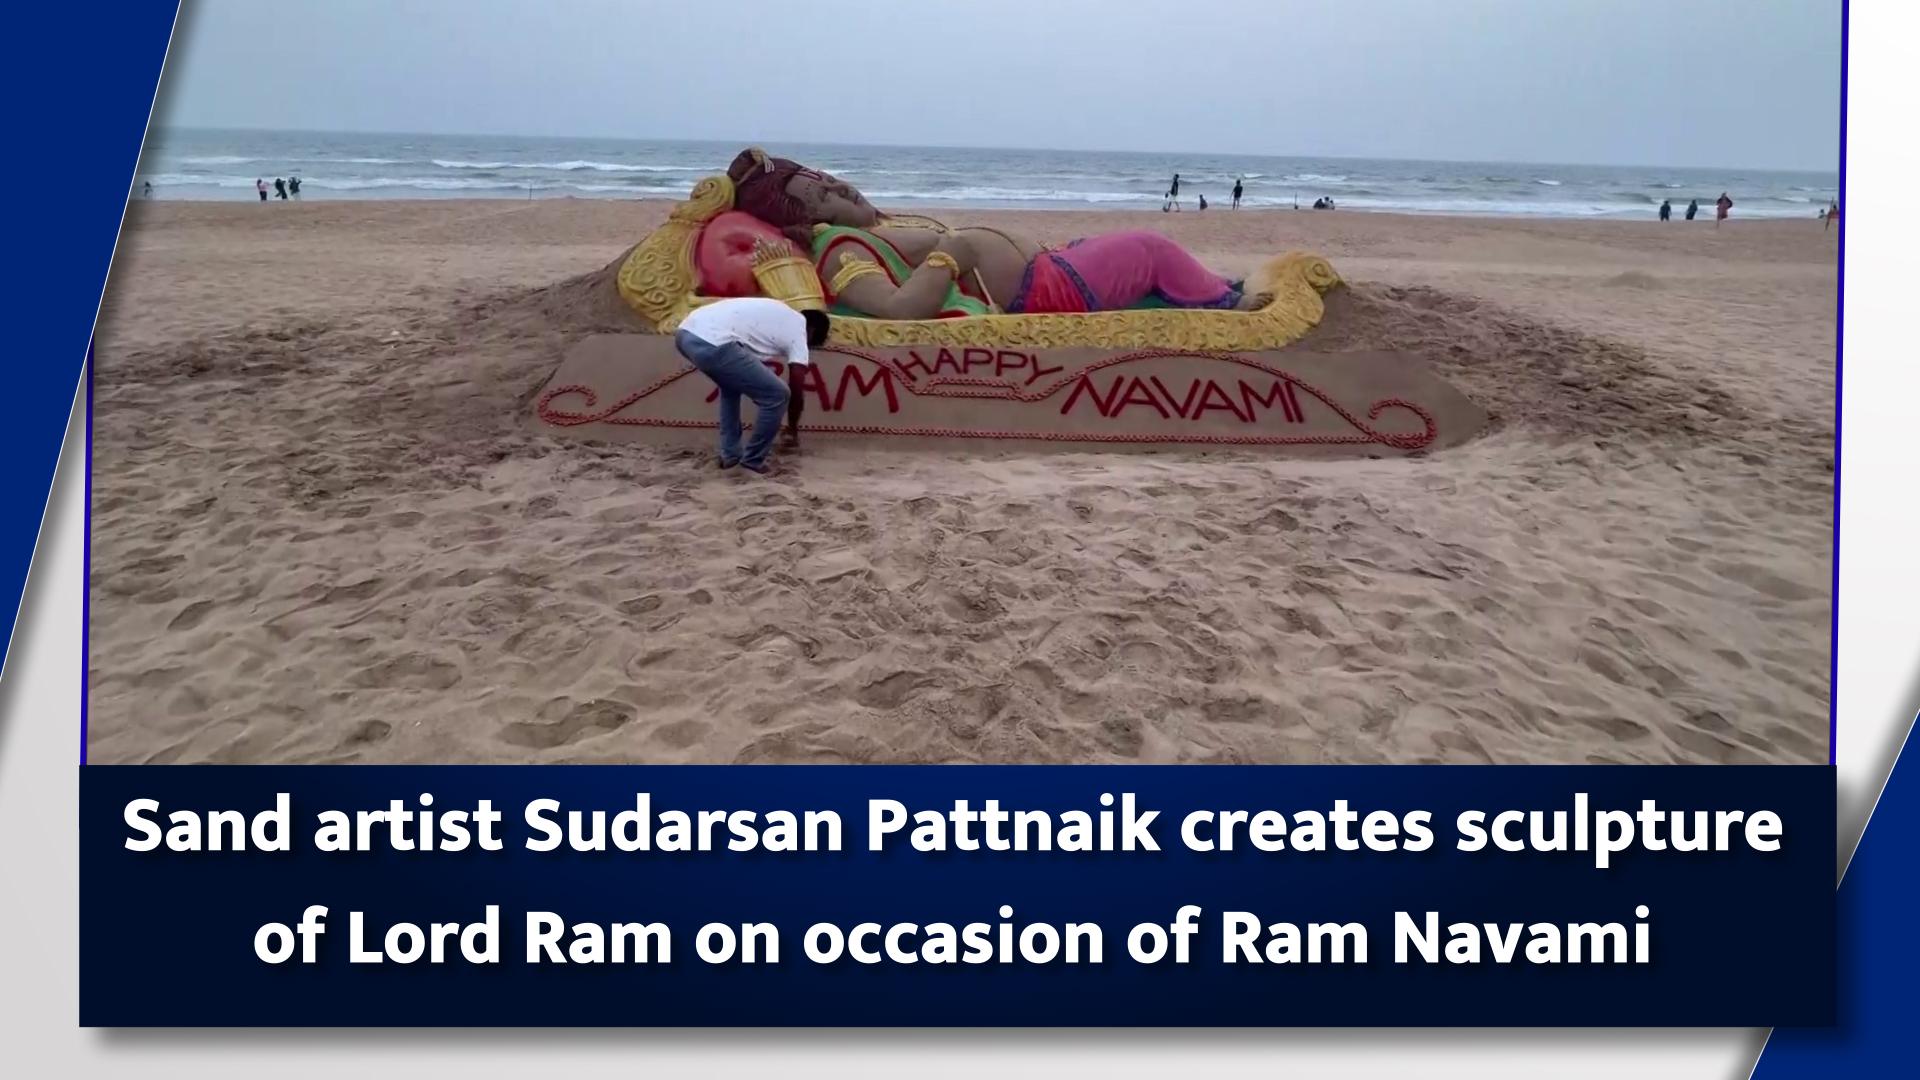 Sand artist Sudarsan Pattnaik creates sculpture of Lord Ram on occasion of Ram Navami